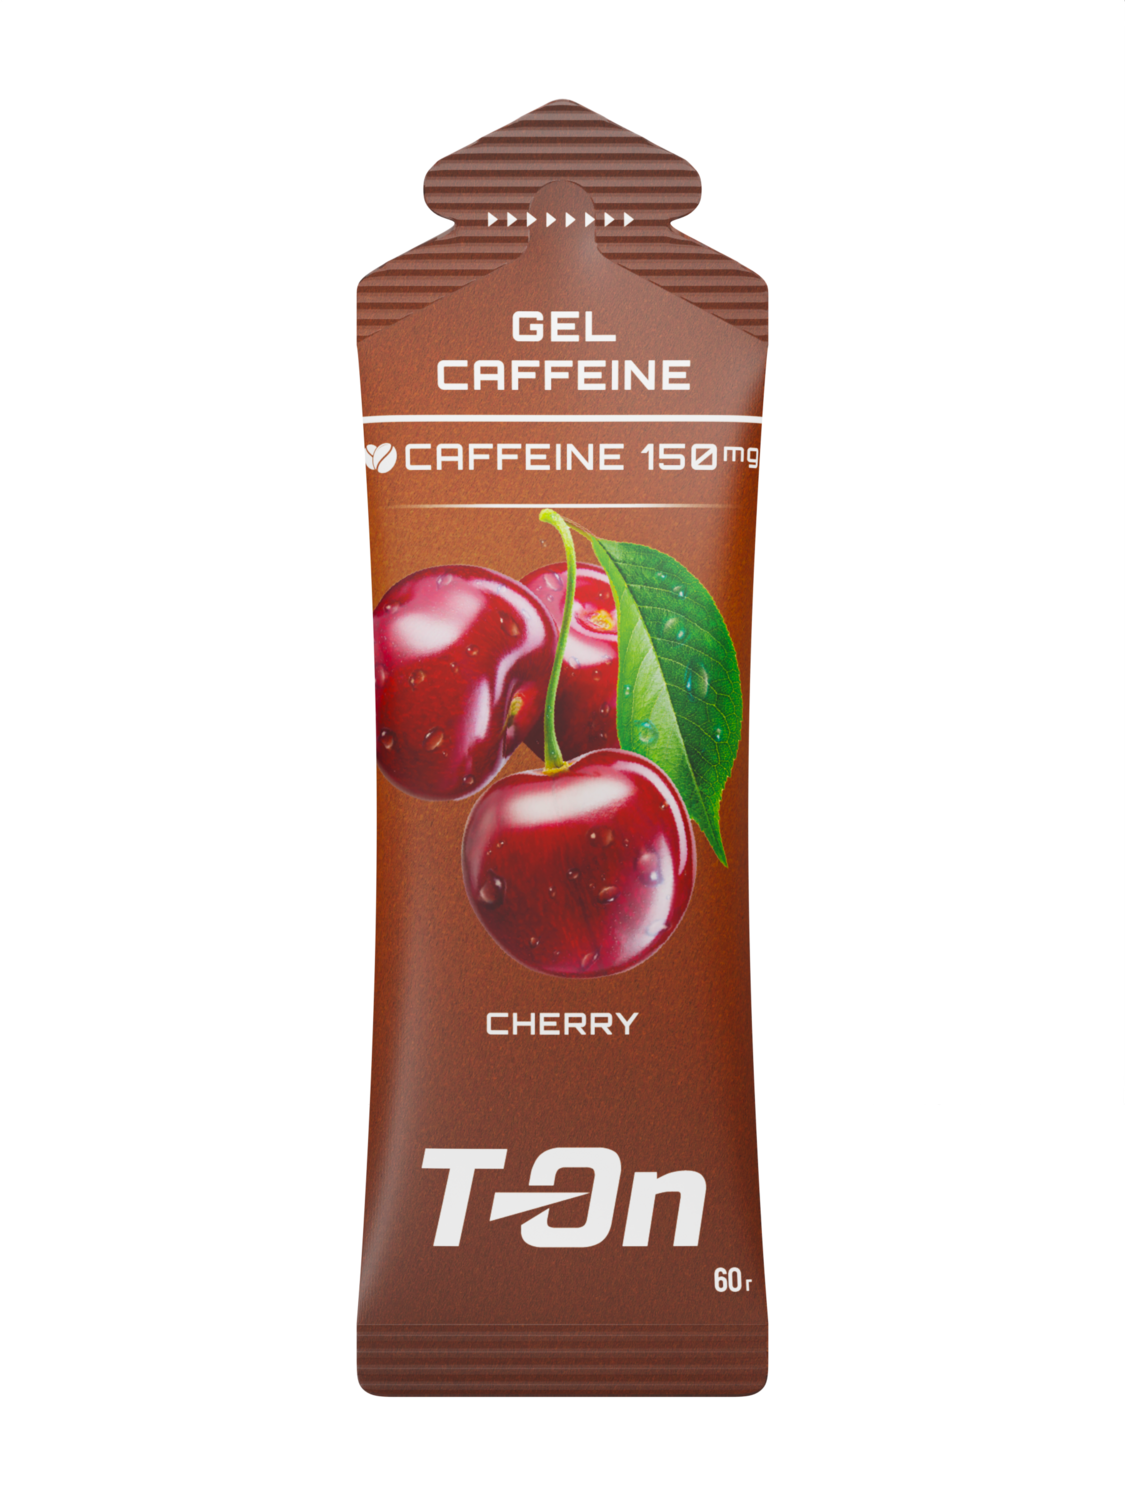 Гель с кофеином T-On Caffeine Gel 150 mg, Вкус: Вишня